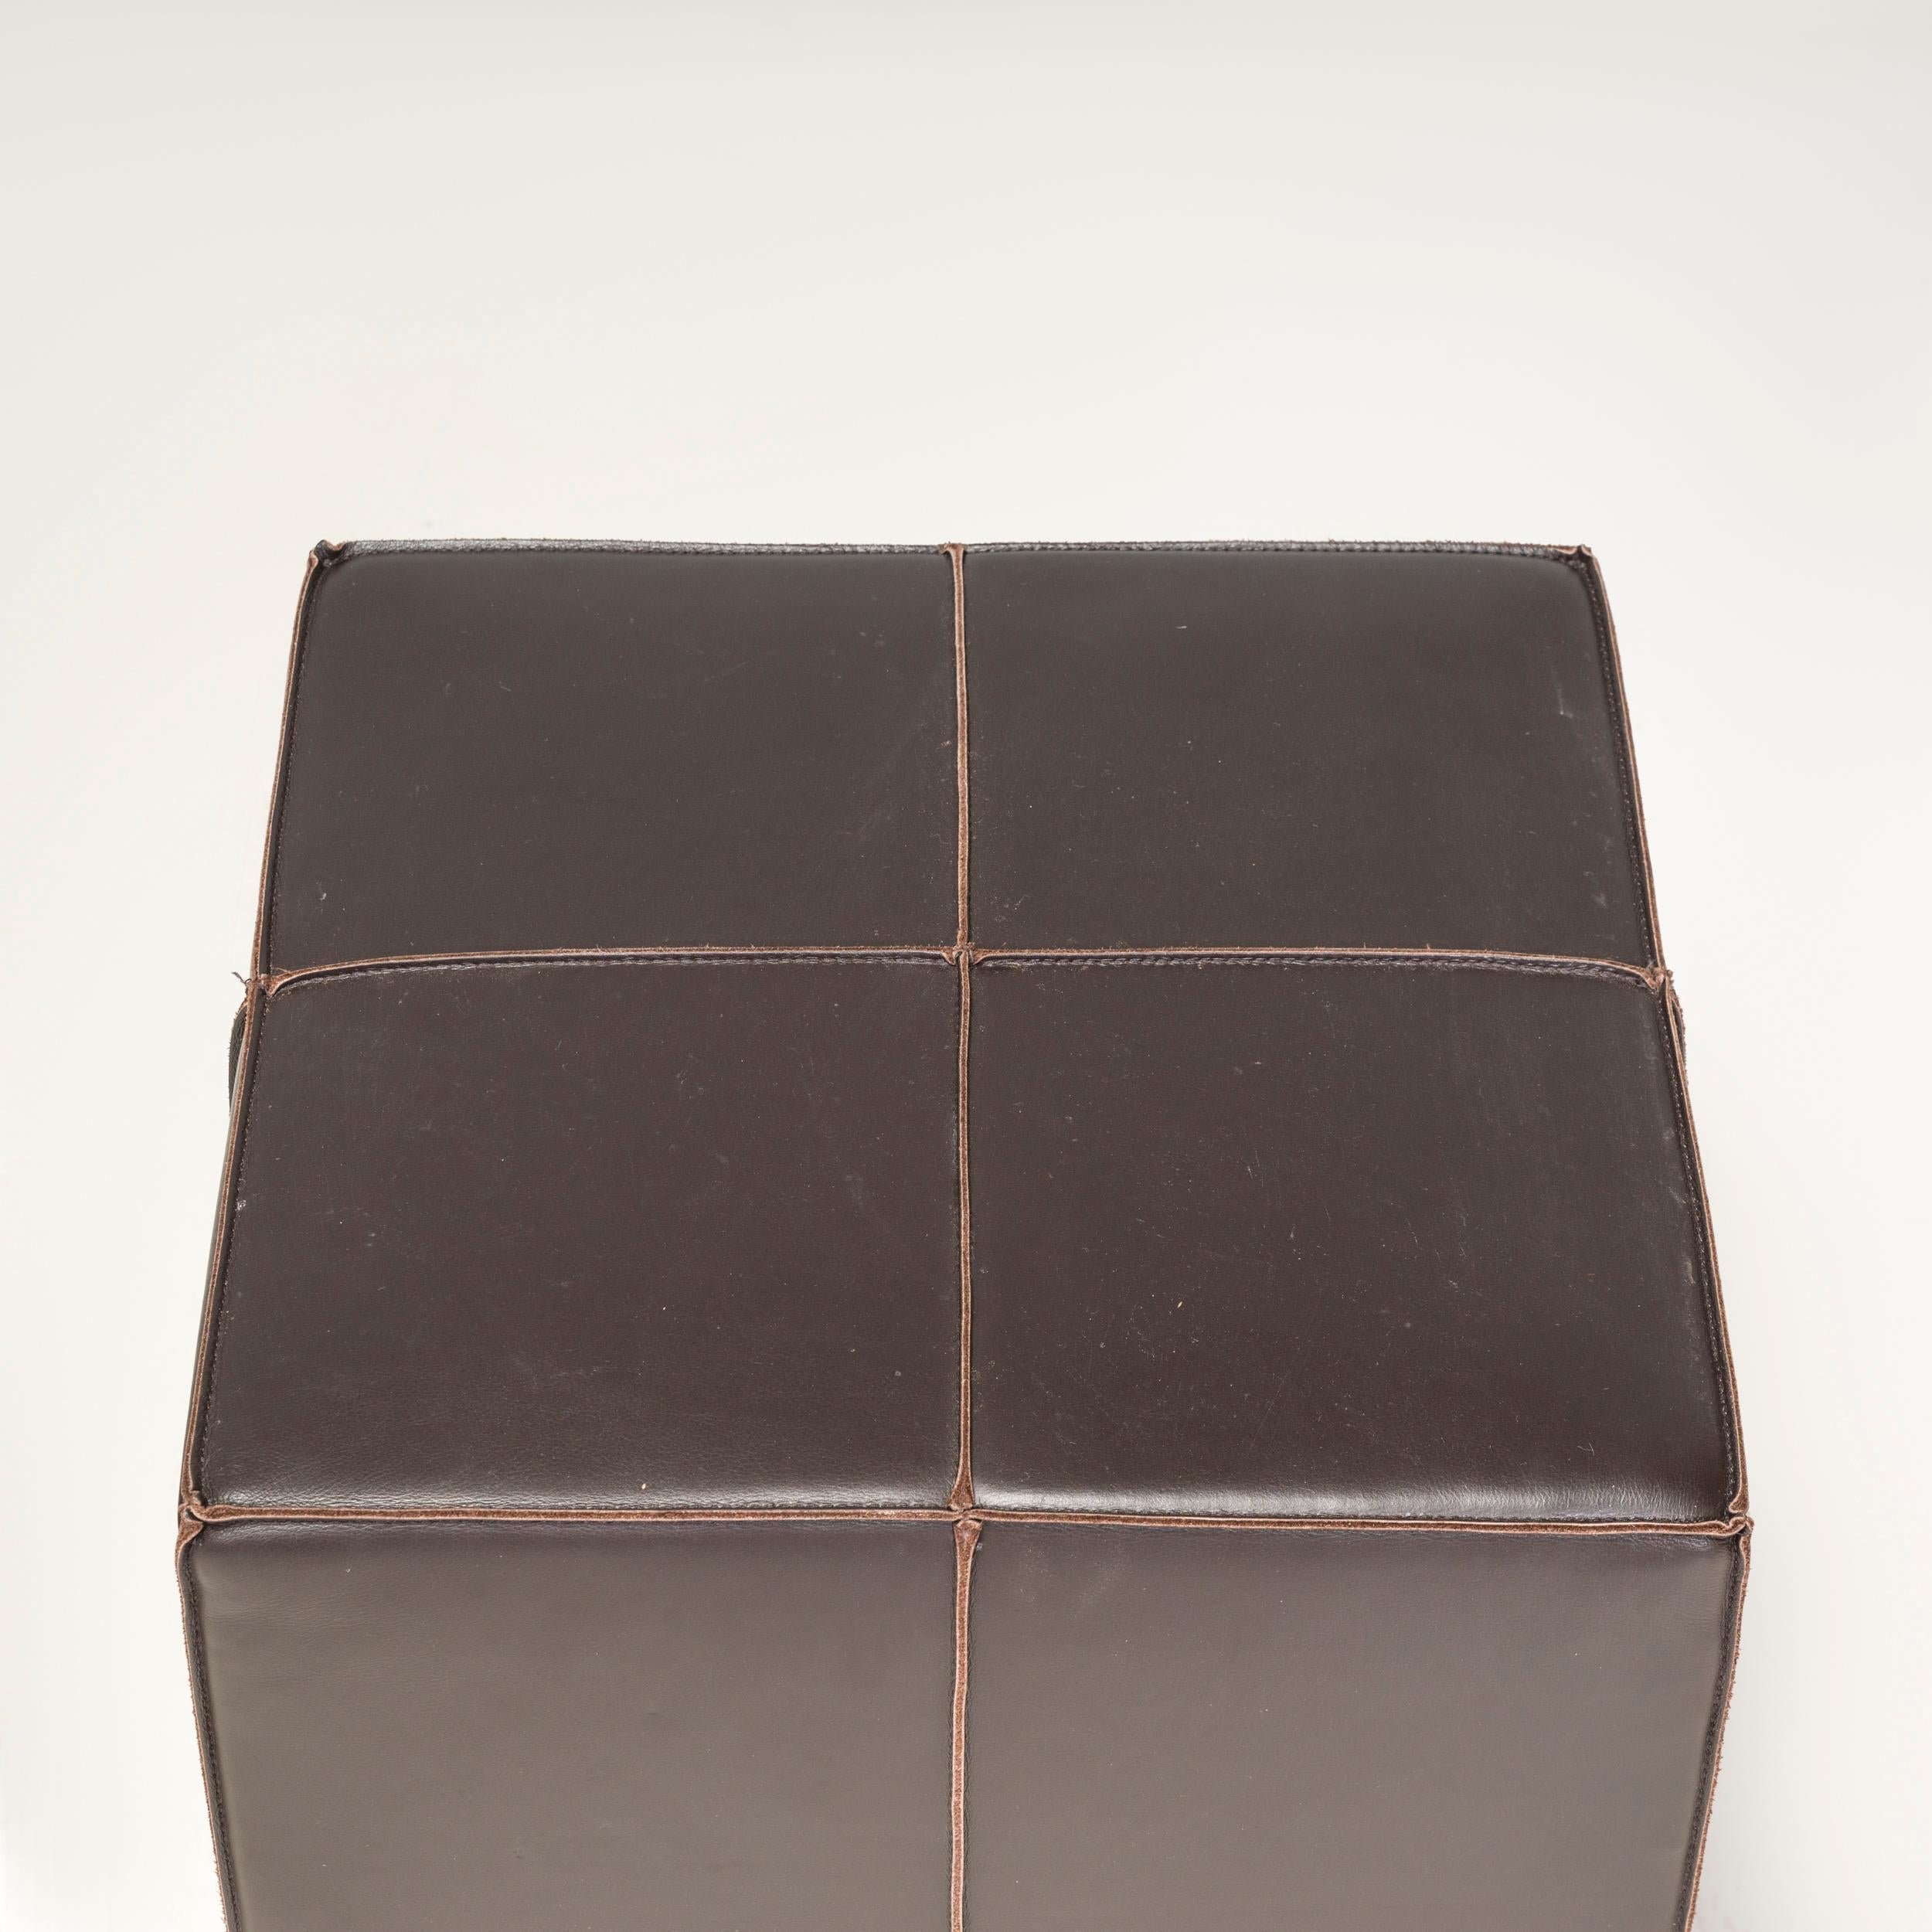 Contemporary Minotti By Rodolfo Dordoni Villon Pouffe Ottomans Chocolate Leather, Set of Two For Sale